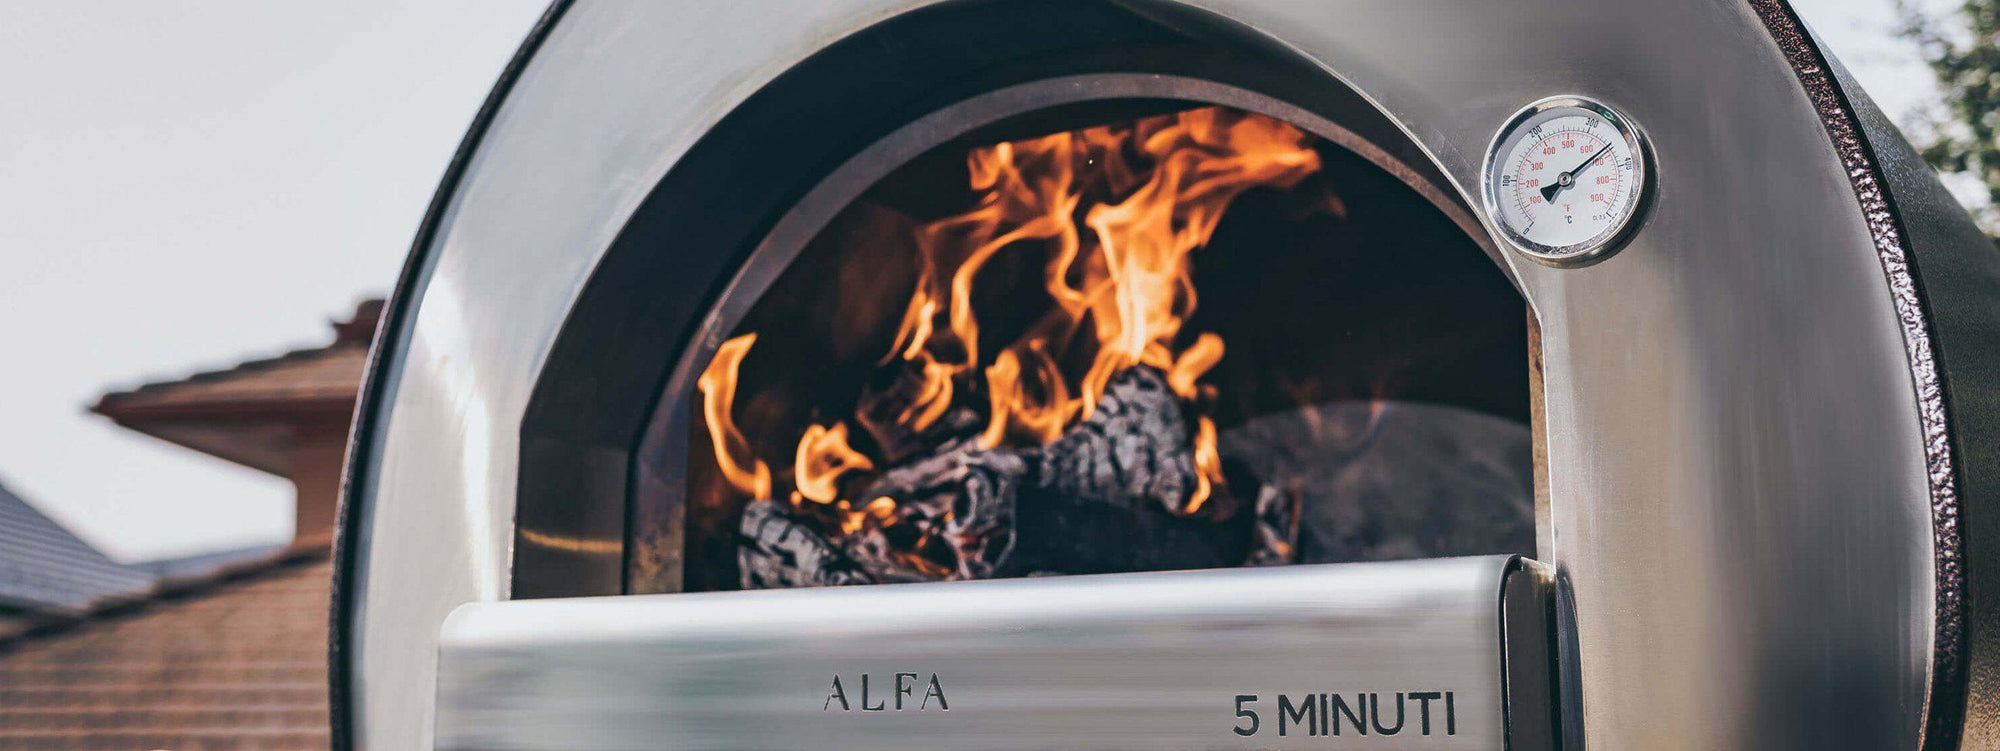 Alfa Forni Pizza Ovens